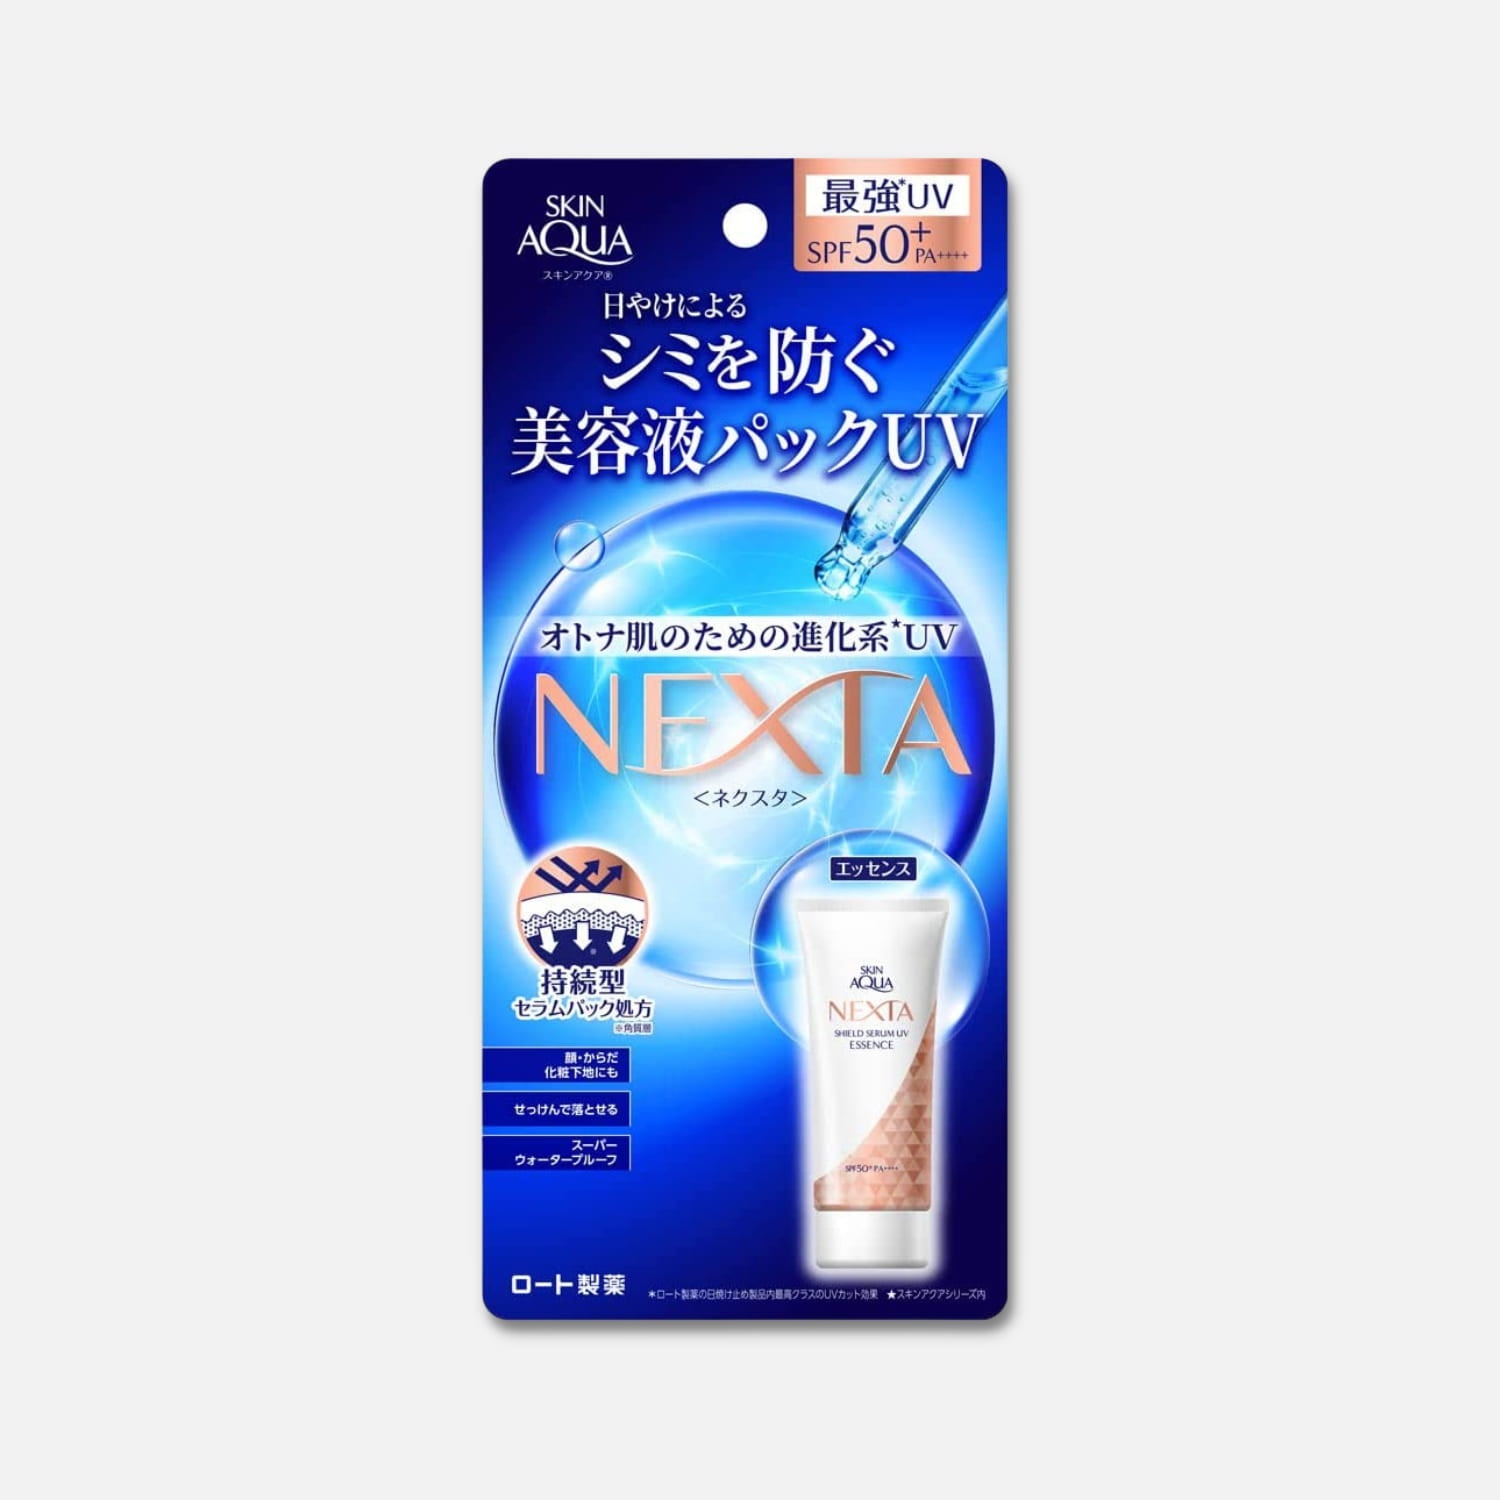 Skin Aqua Nexta Shield Serum UV Essence SPF 50+ PA++++ 70g - Buy Me Japan